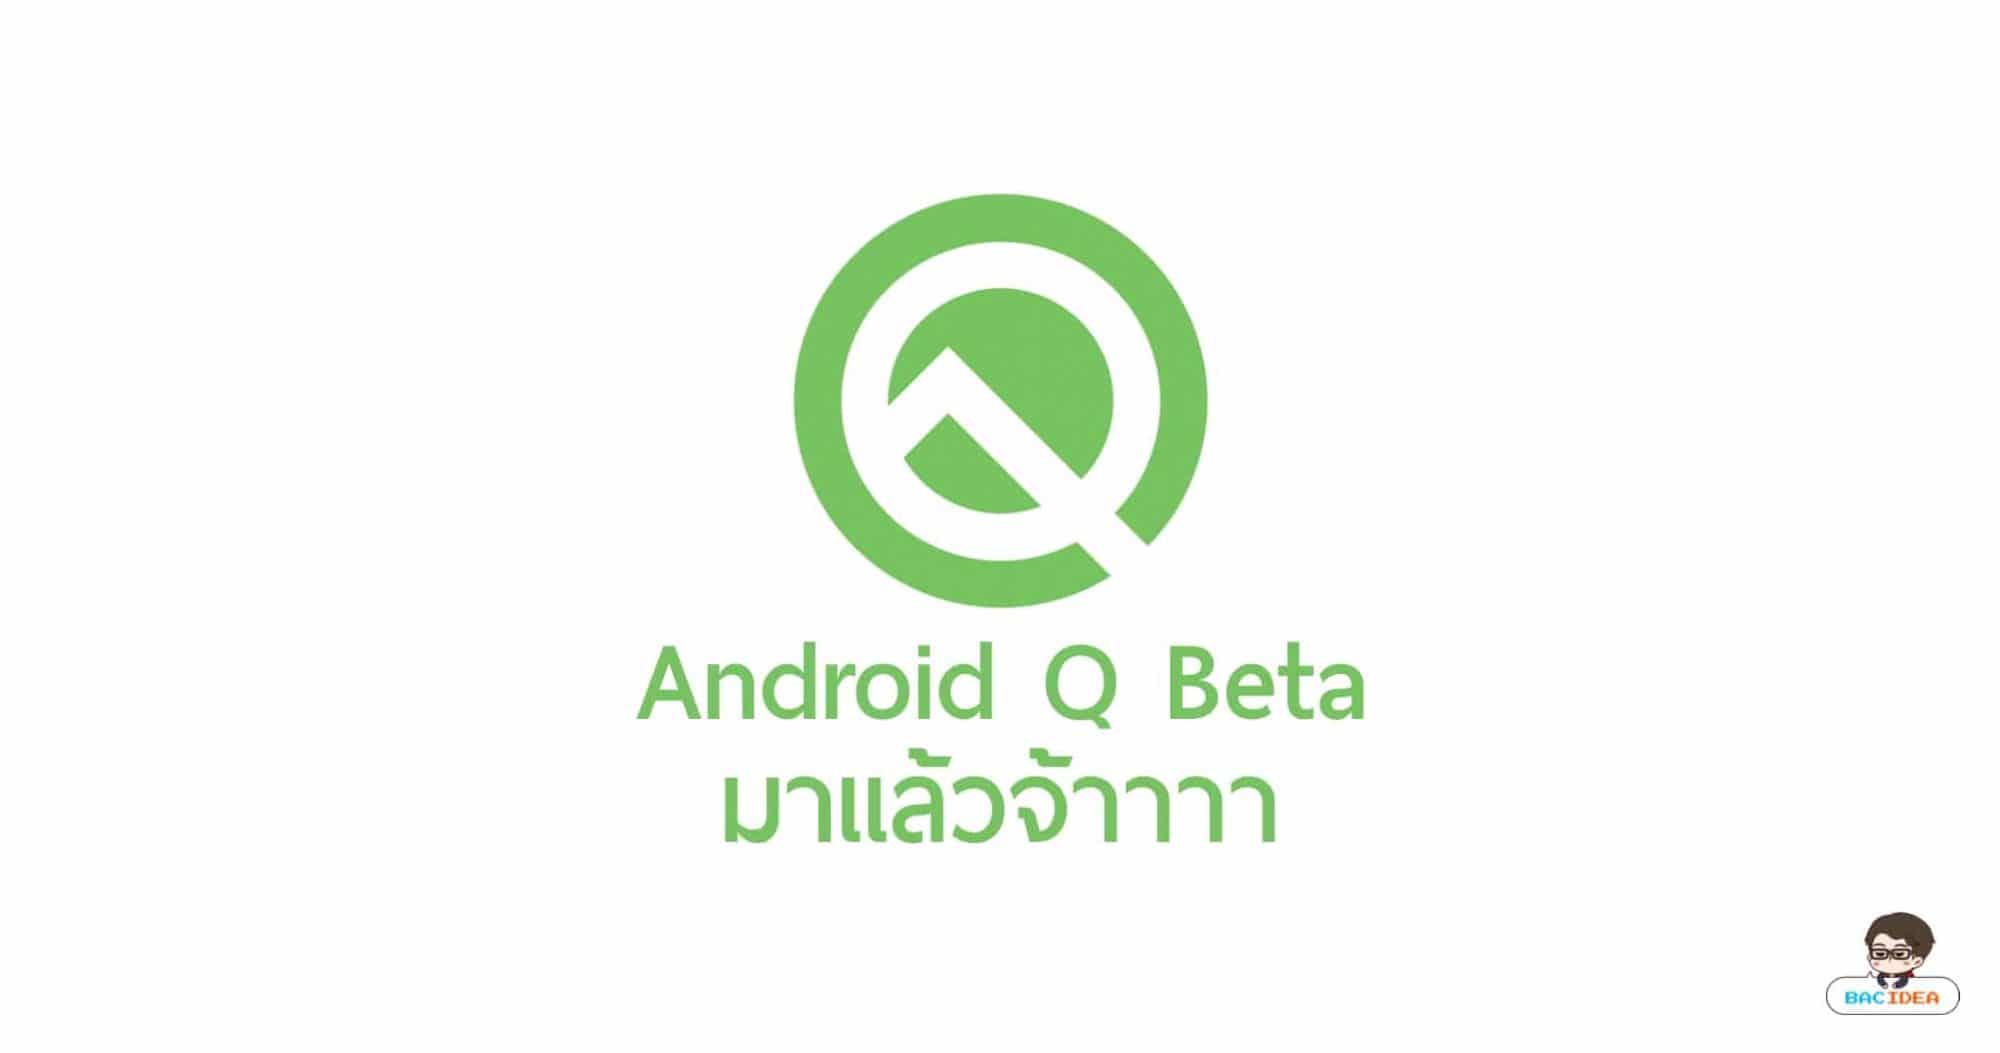 Android Q beta มาแล้ว! มาดูกันว่ามีอะไรใหม่บ้าง 1